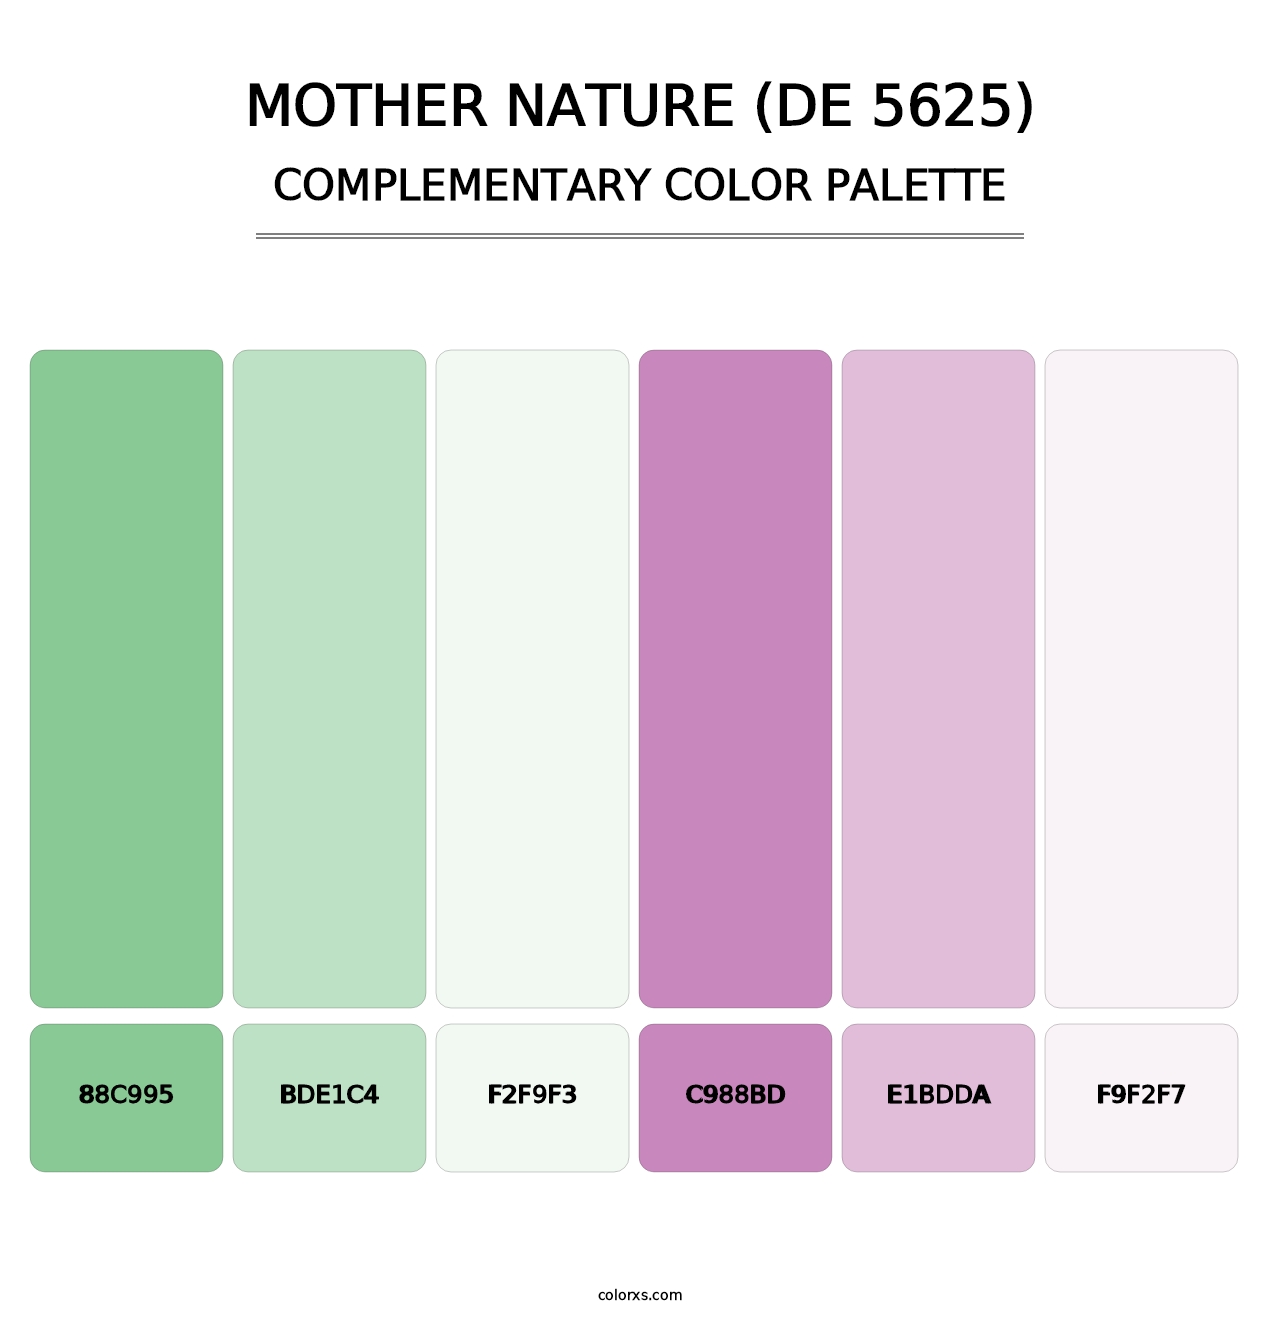 Mother Nature (DE 5625) - Complementary Color Palette